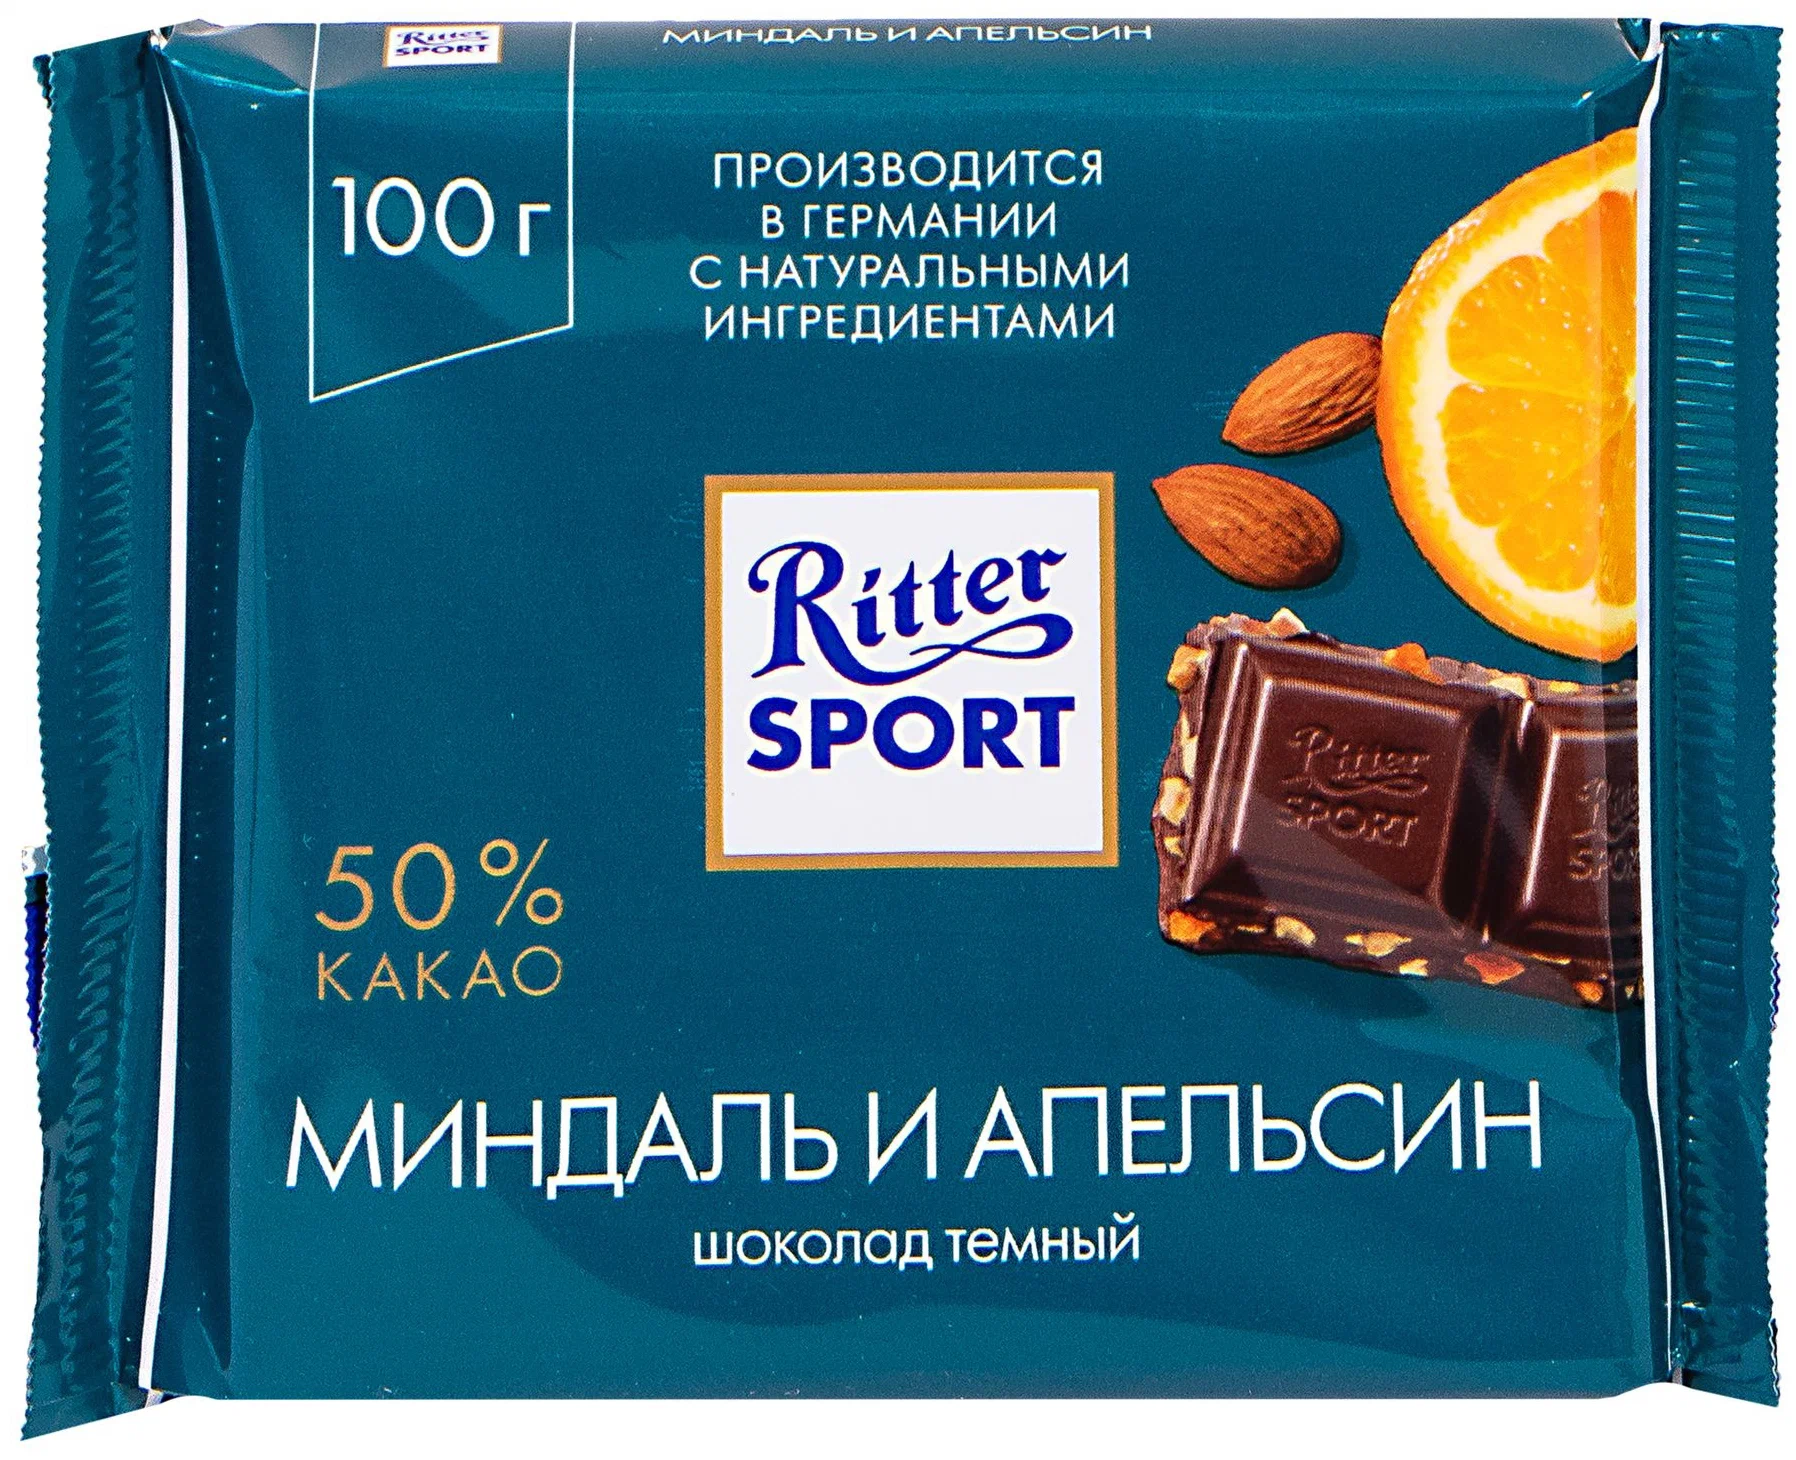 Ritter Sport "Миндаль и апельсин" - вид шоколада: темный